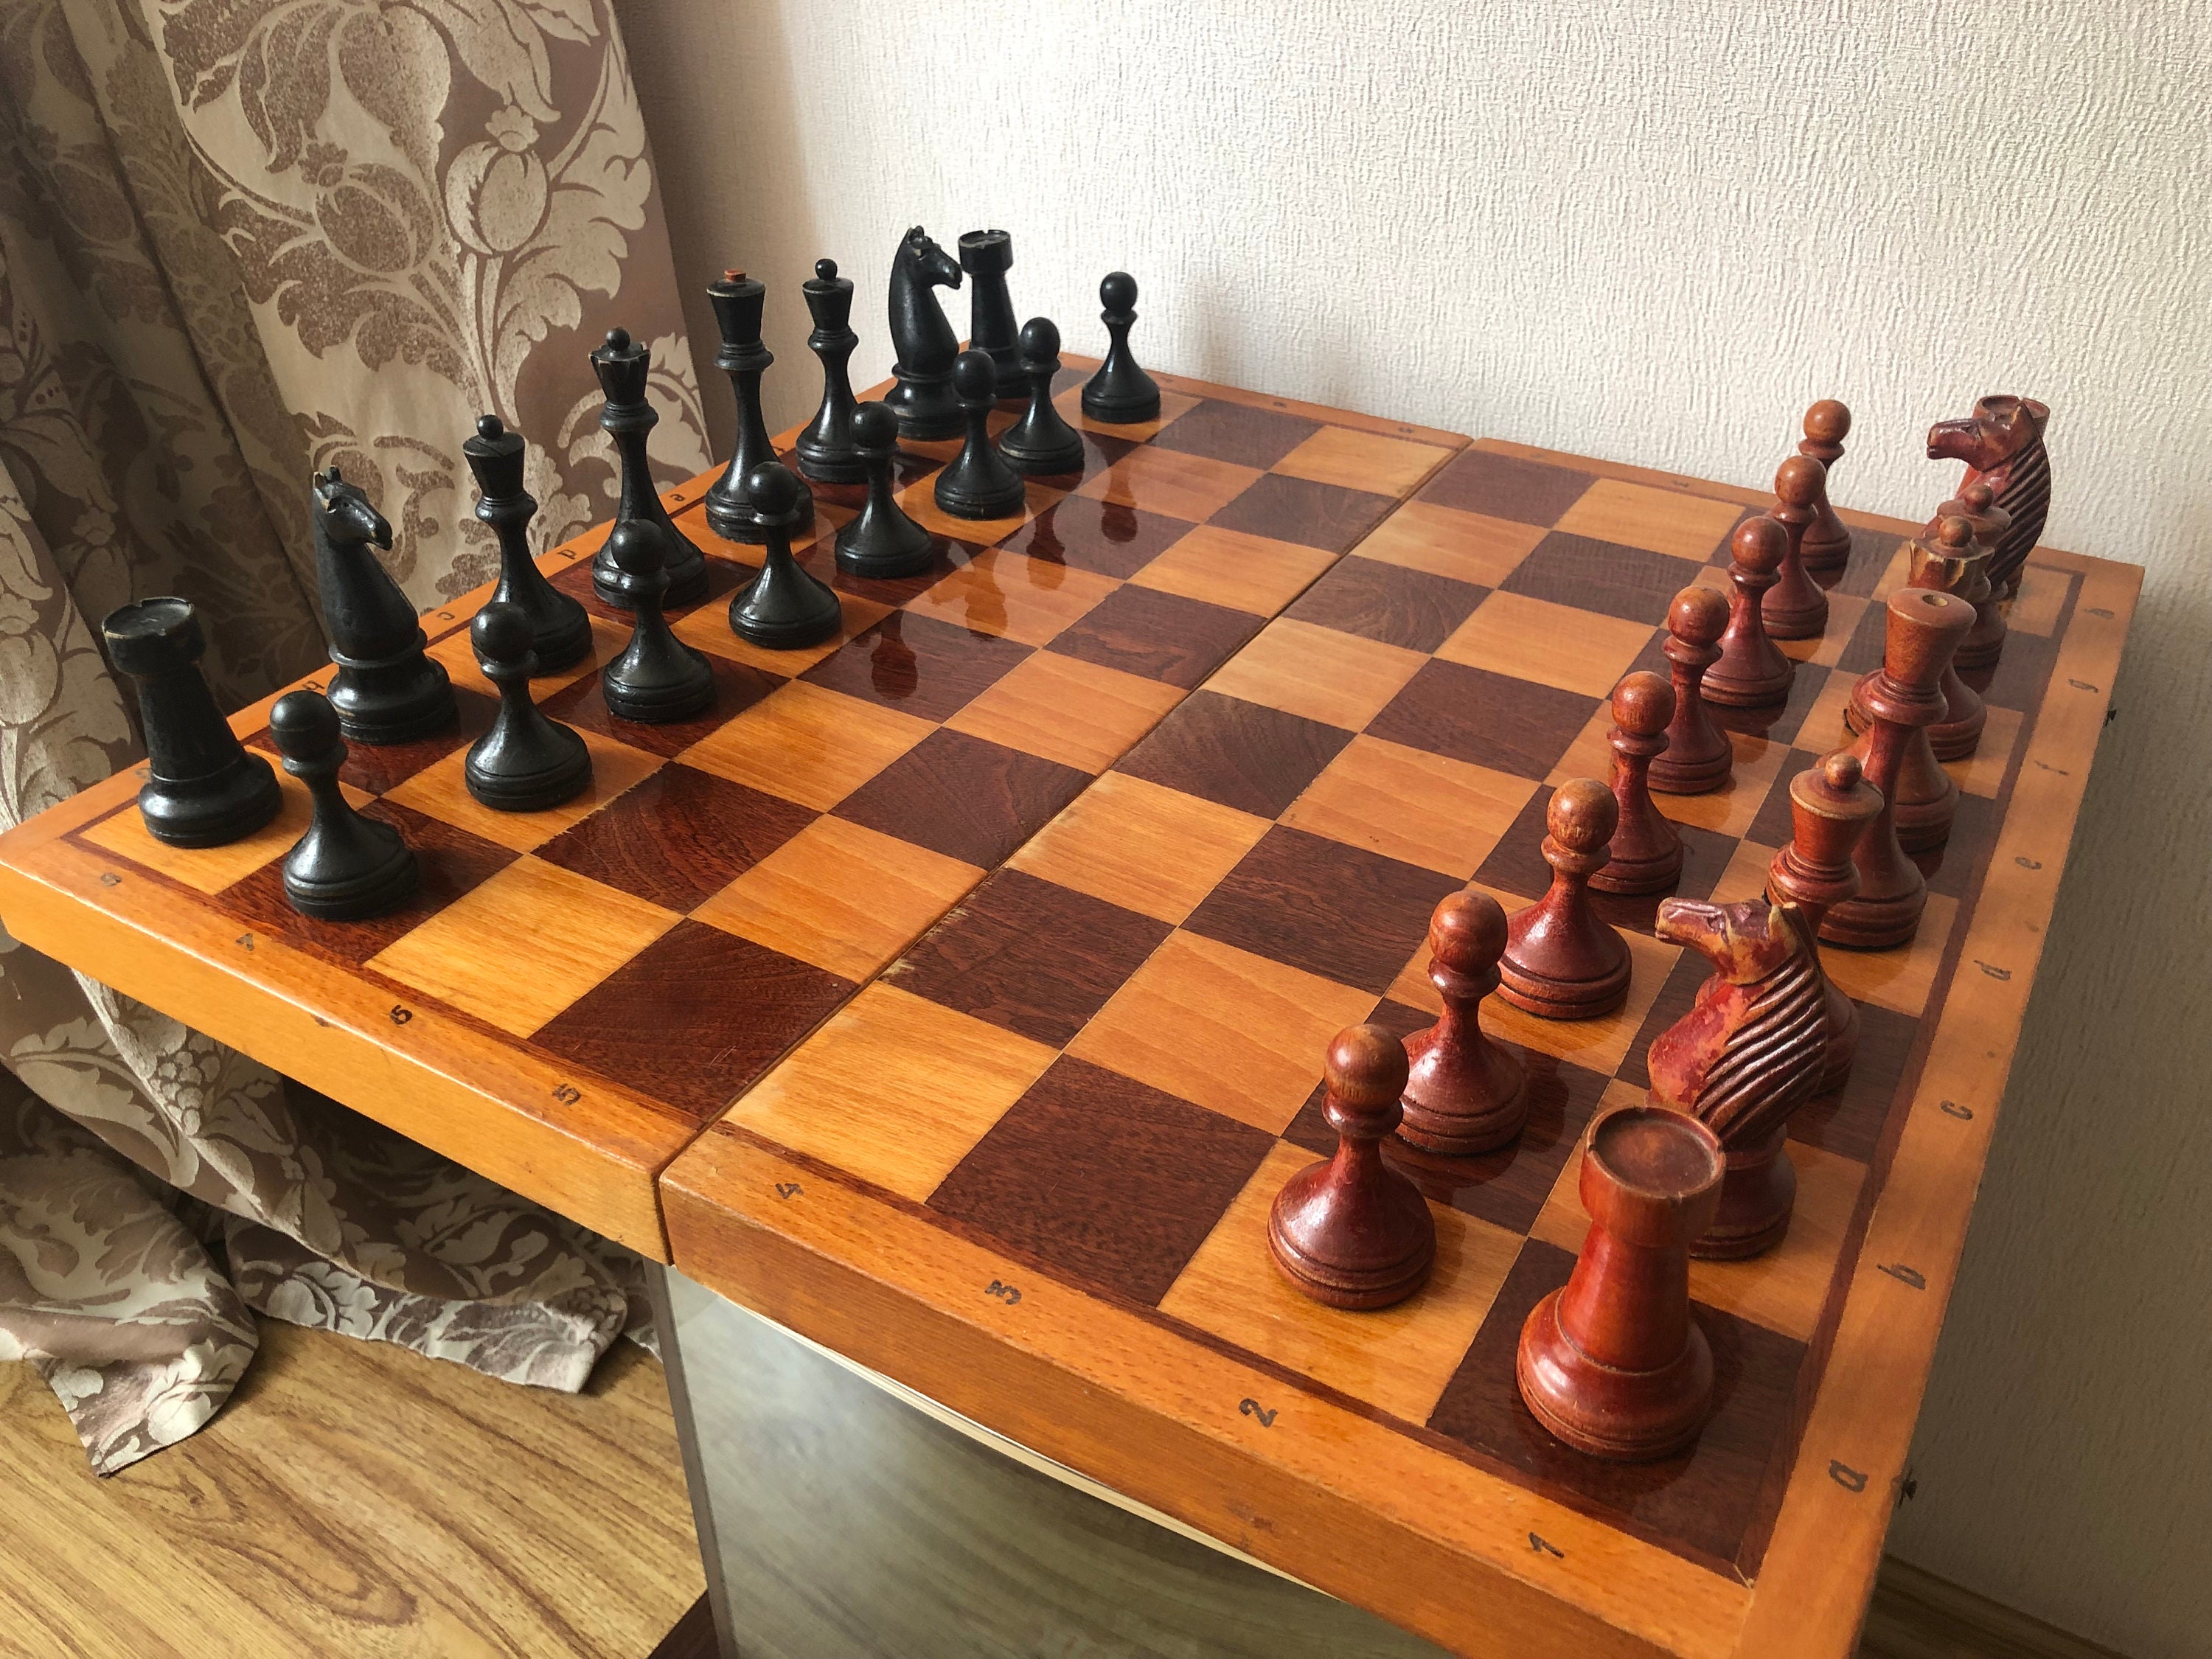 1933 Botvinnik Flohr-I Soviet Golden Rosewood Chess Pieces